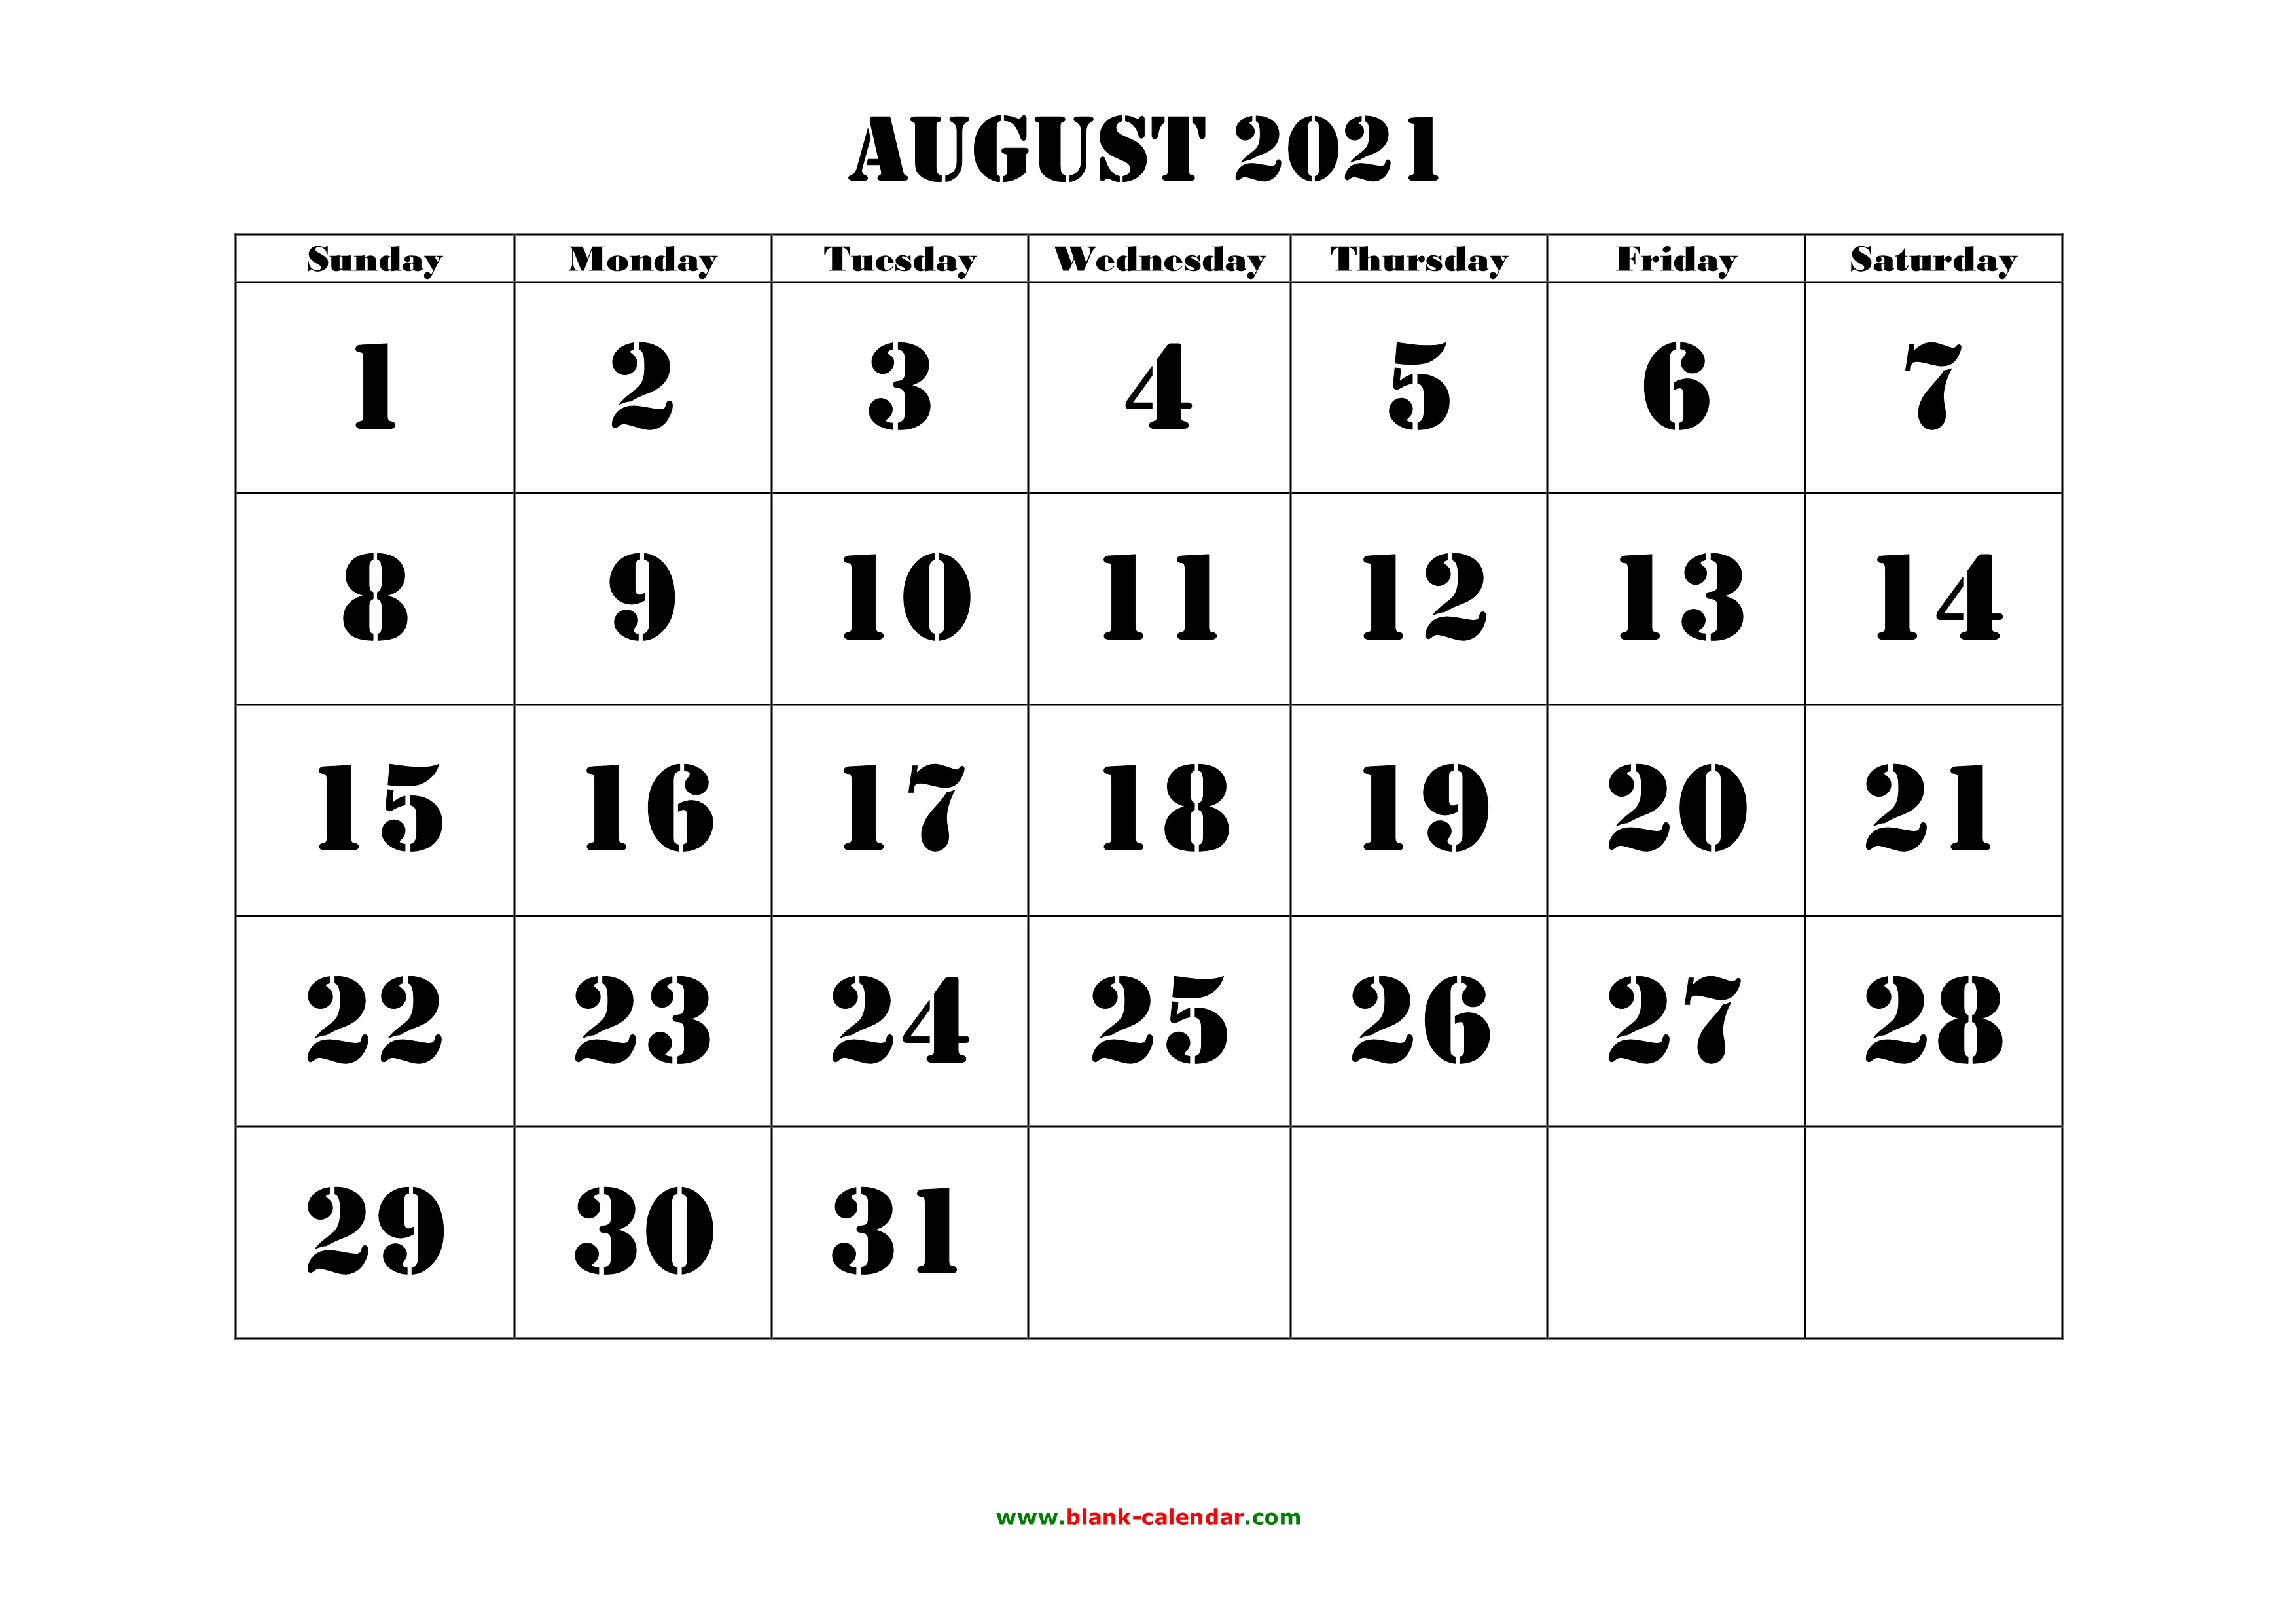 Calendar Of August 2021 Free Download Printable August 2021 Calendar, large font design 